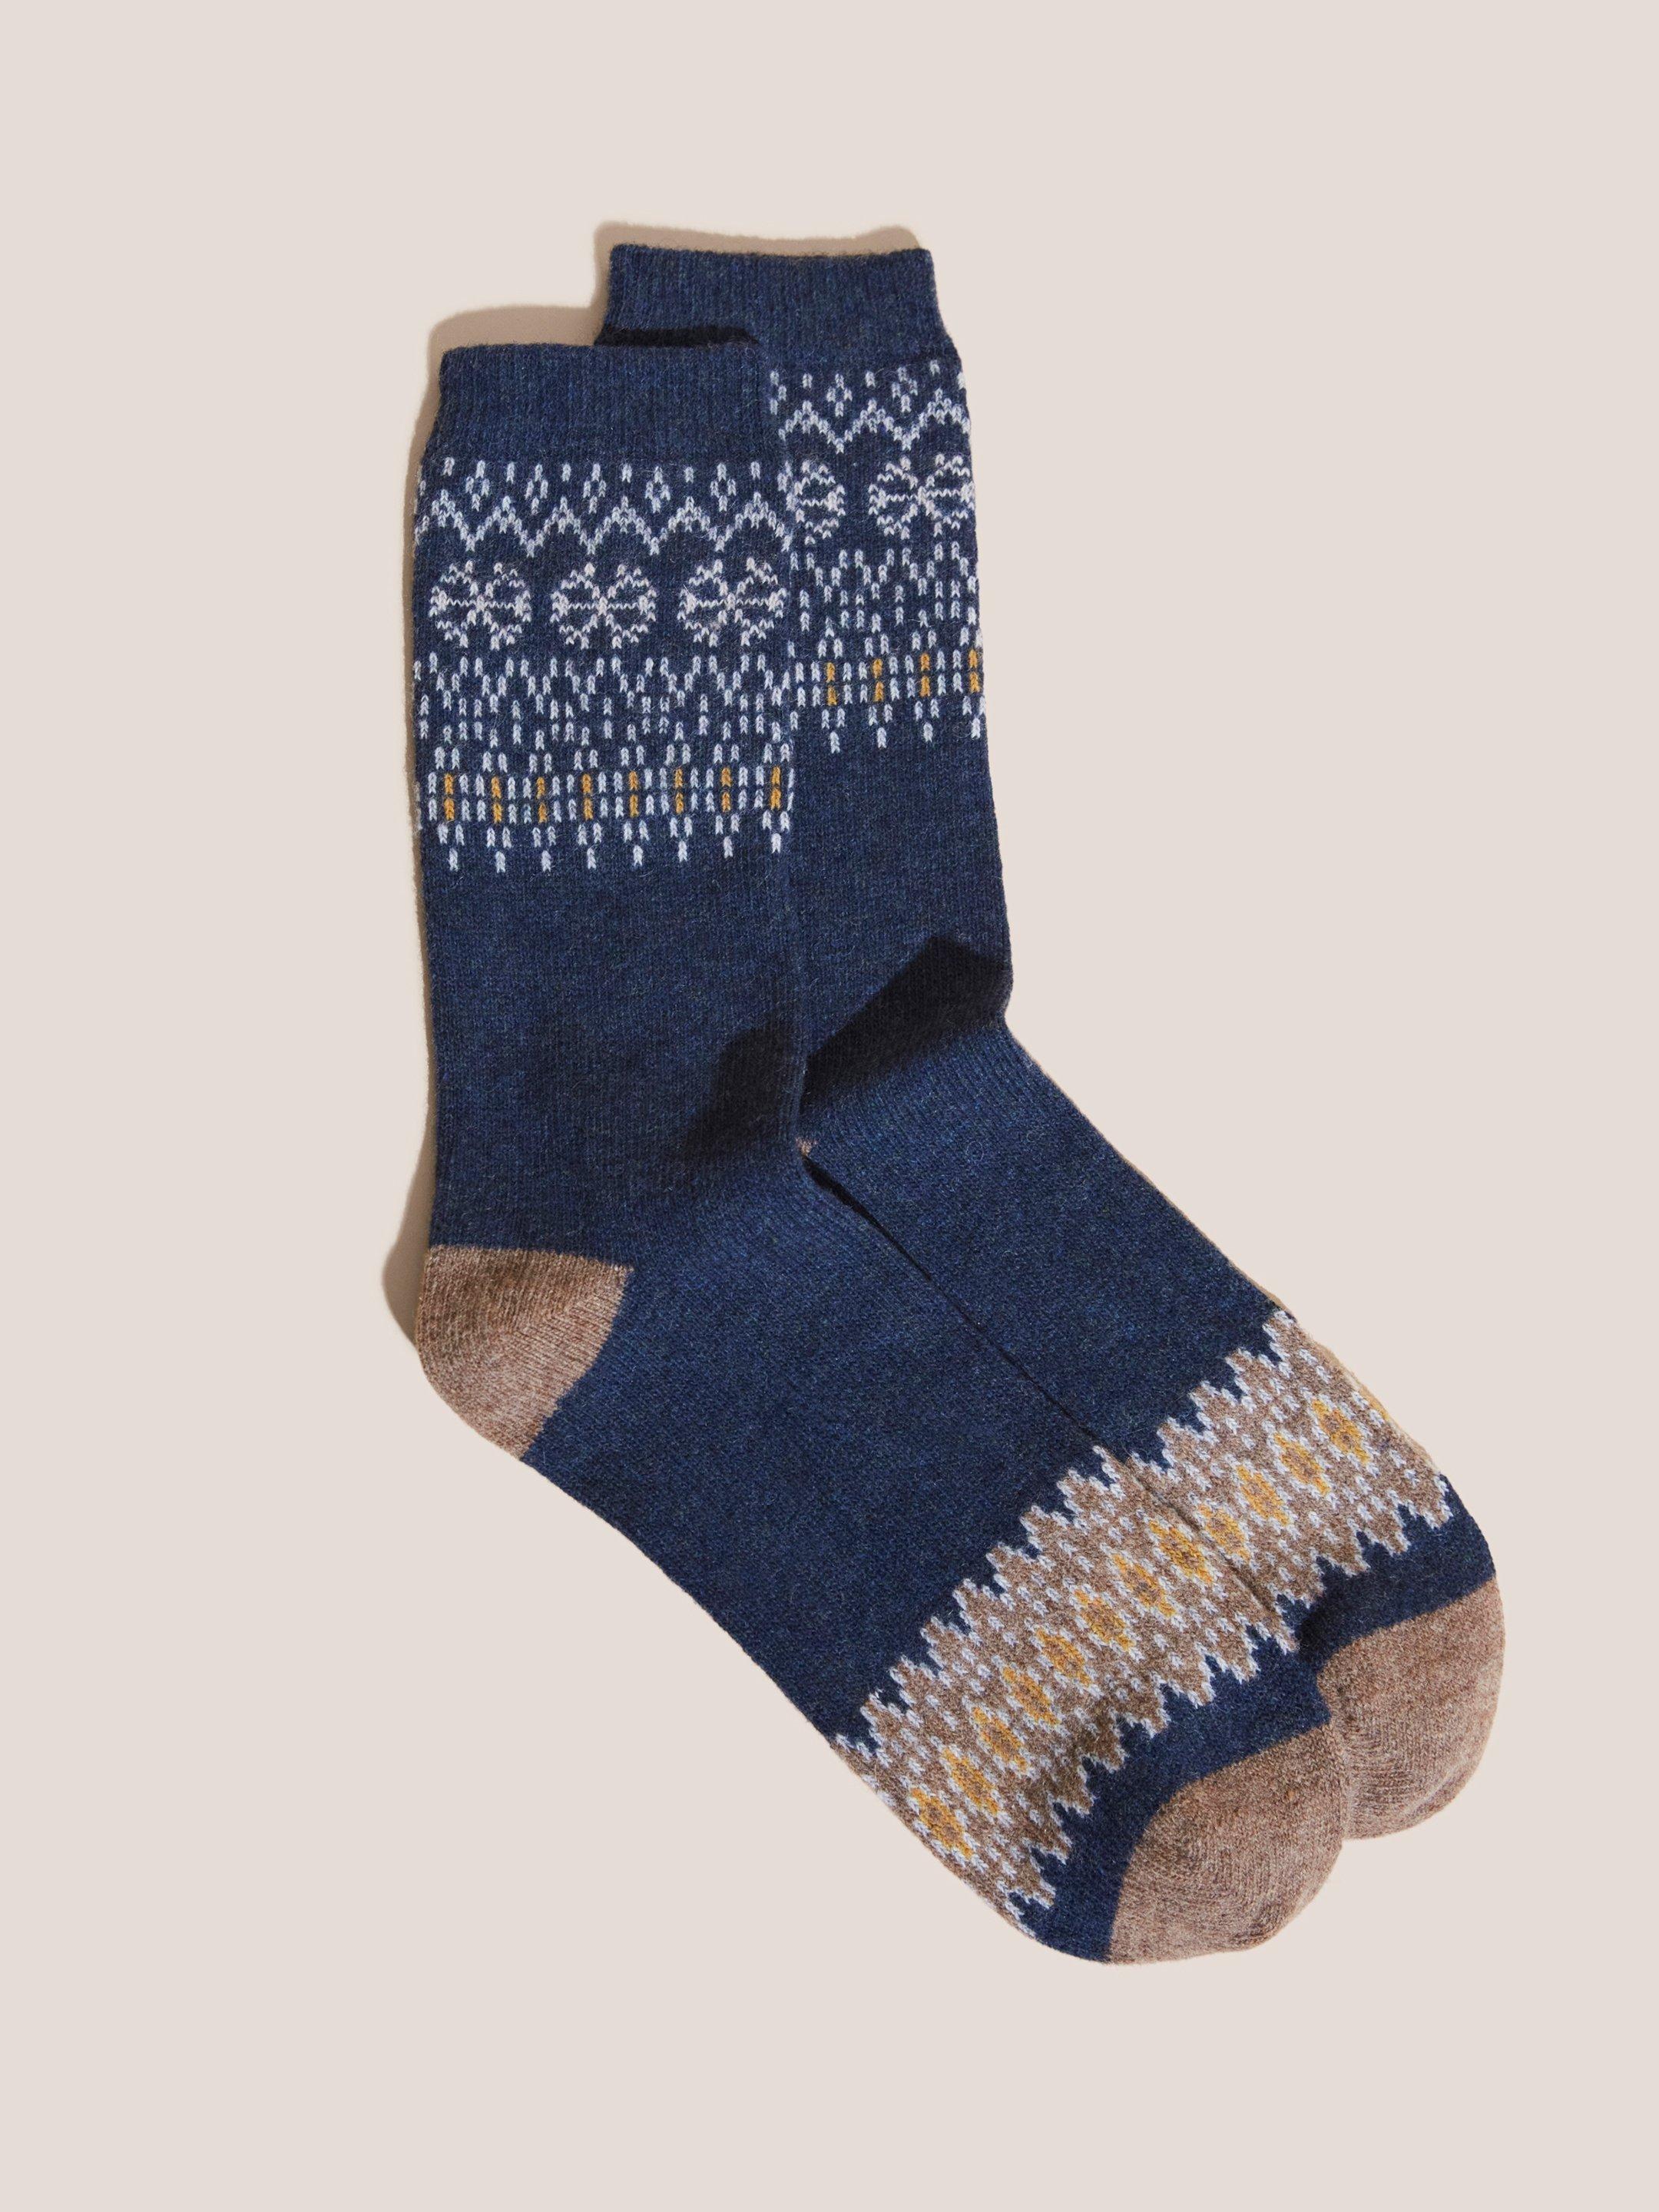 Fairisle Loopback Socks in NAVY MULTI - FLAT FRONT